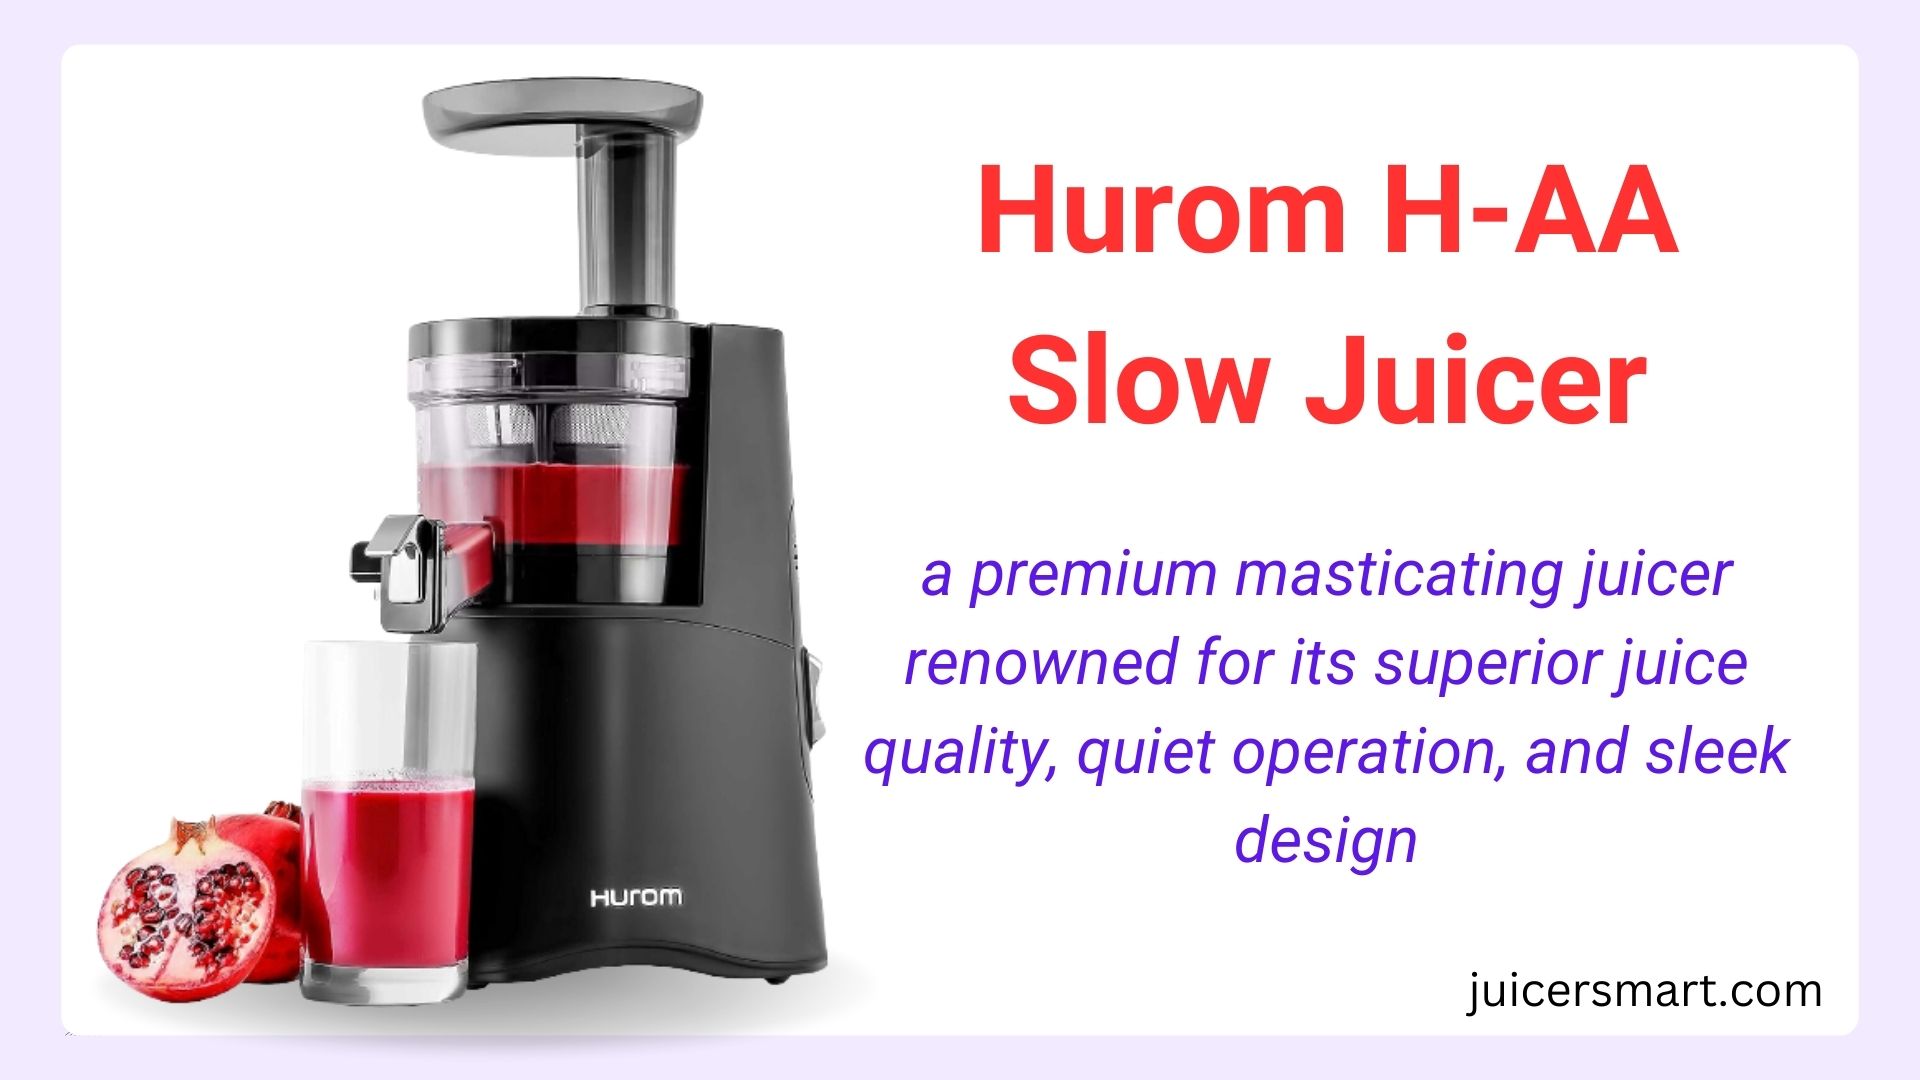 Hurom H-AA Slow Juicer